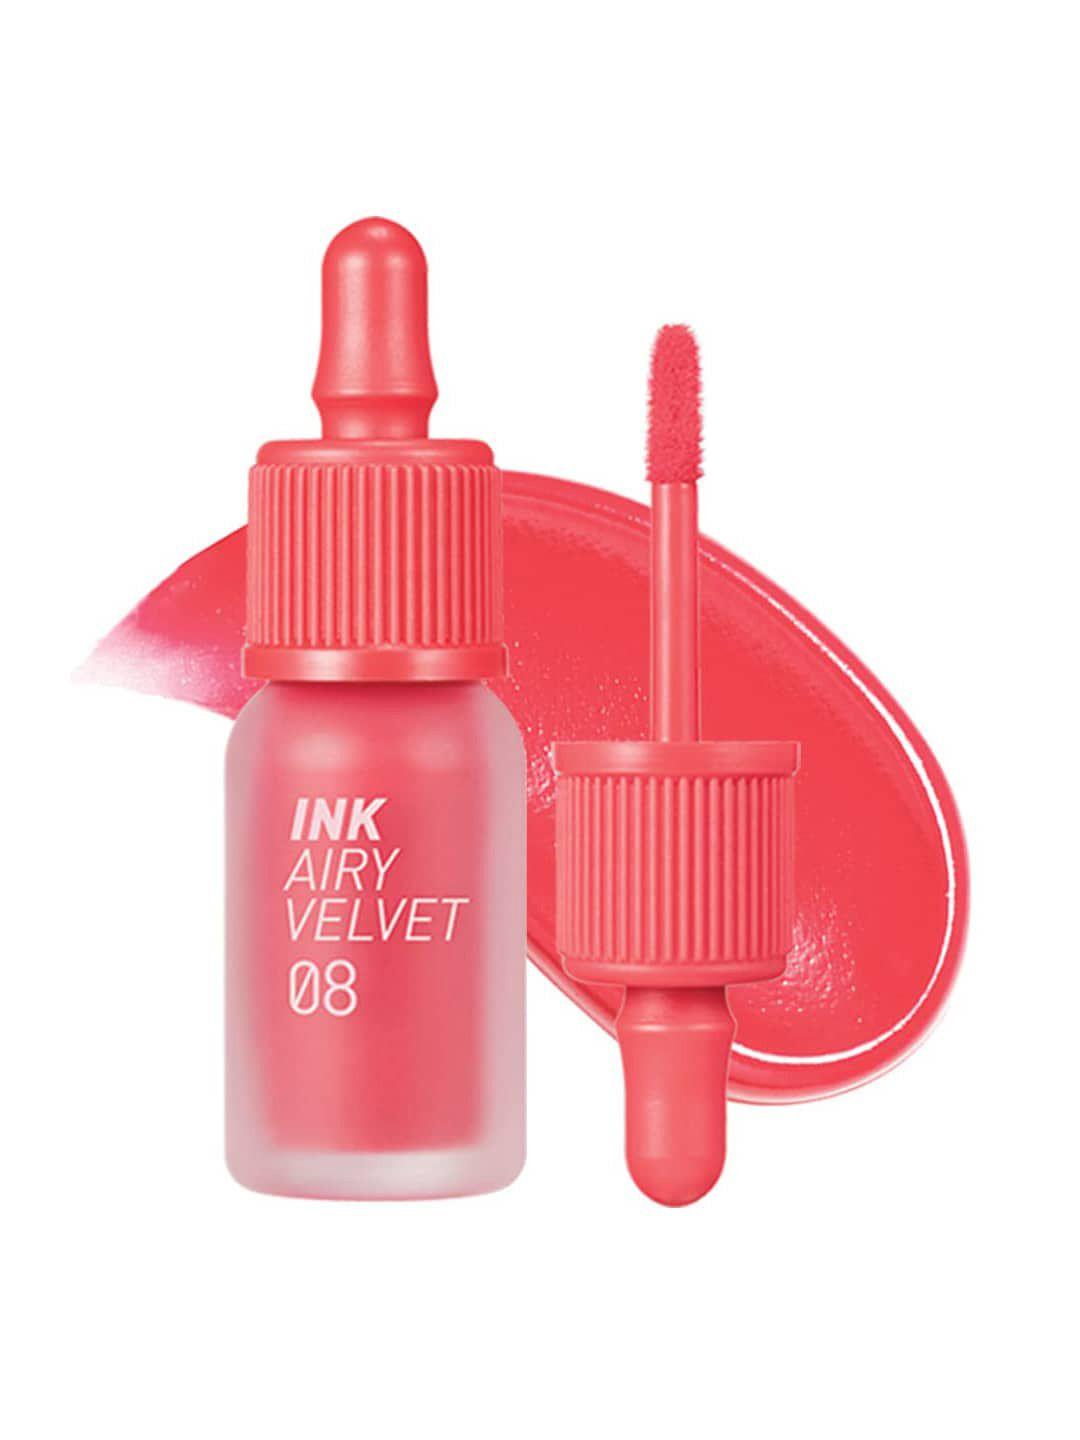 peripera ink airy velvet long-lasting liquid lipstick - pretty orange pink 08